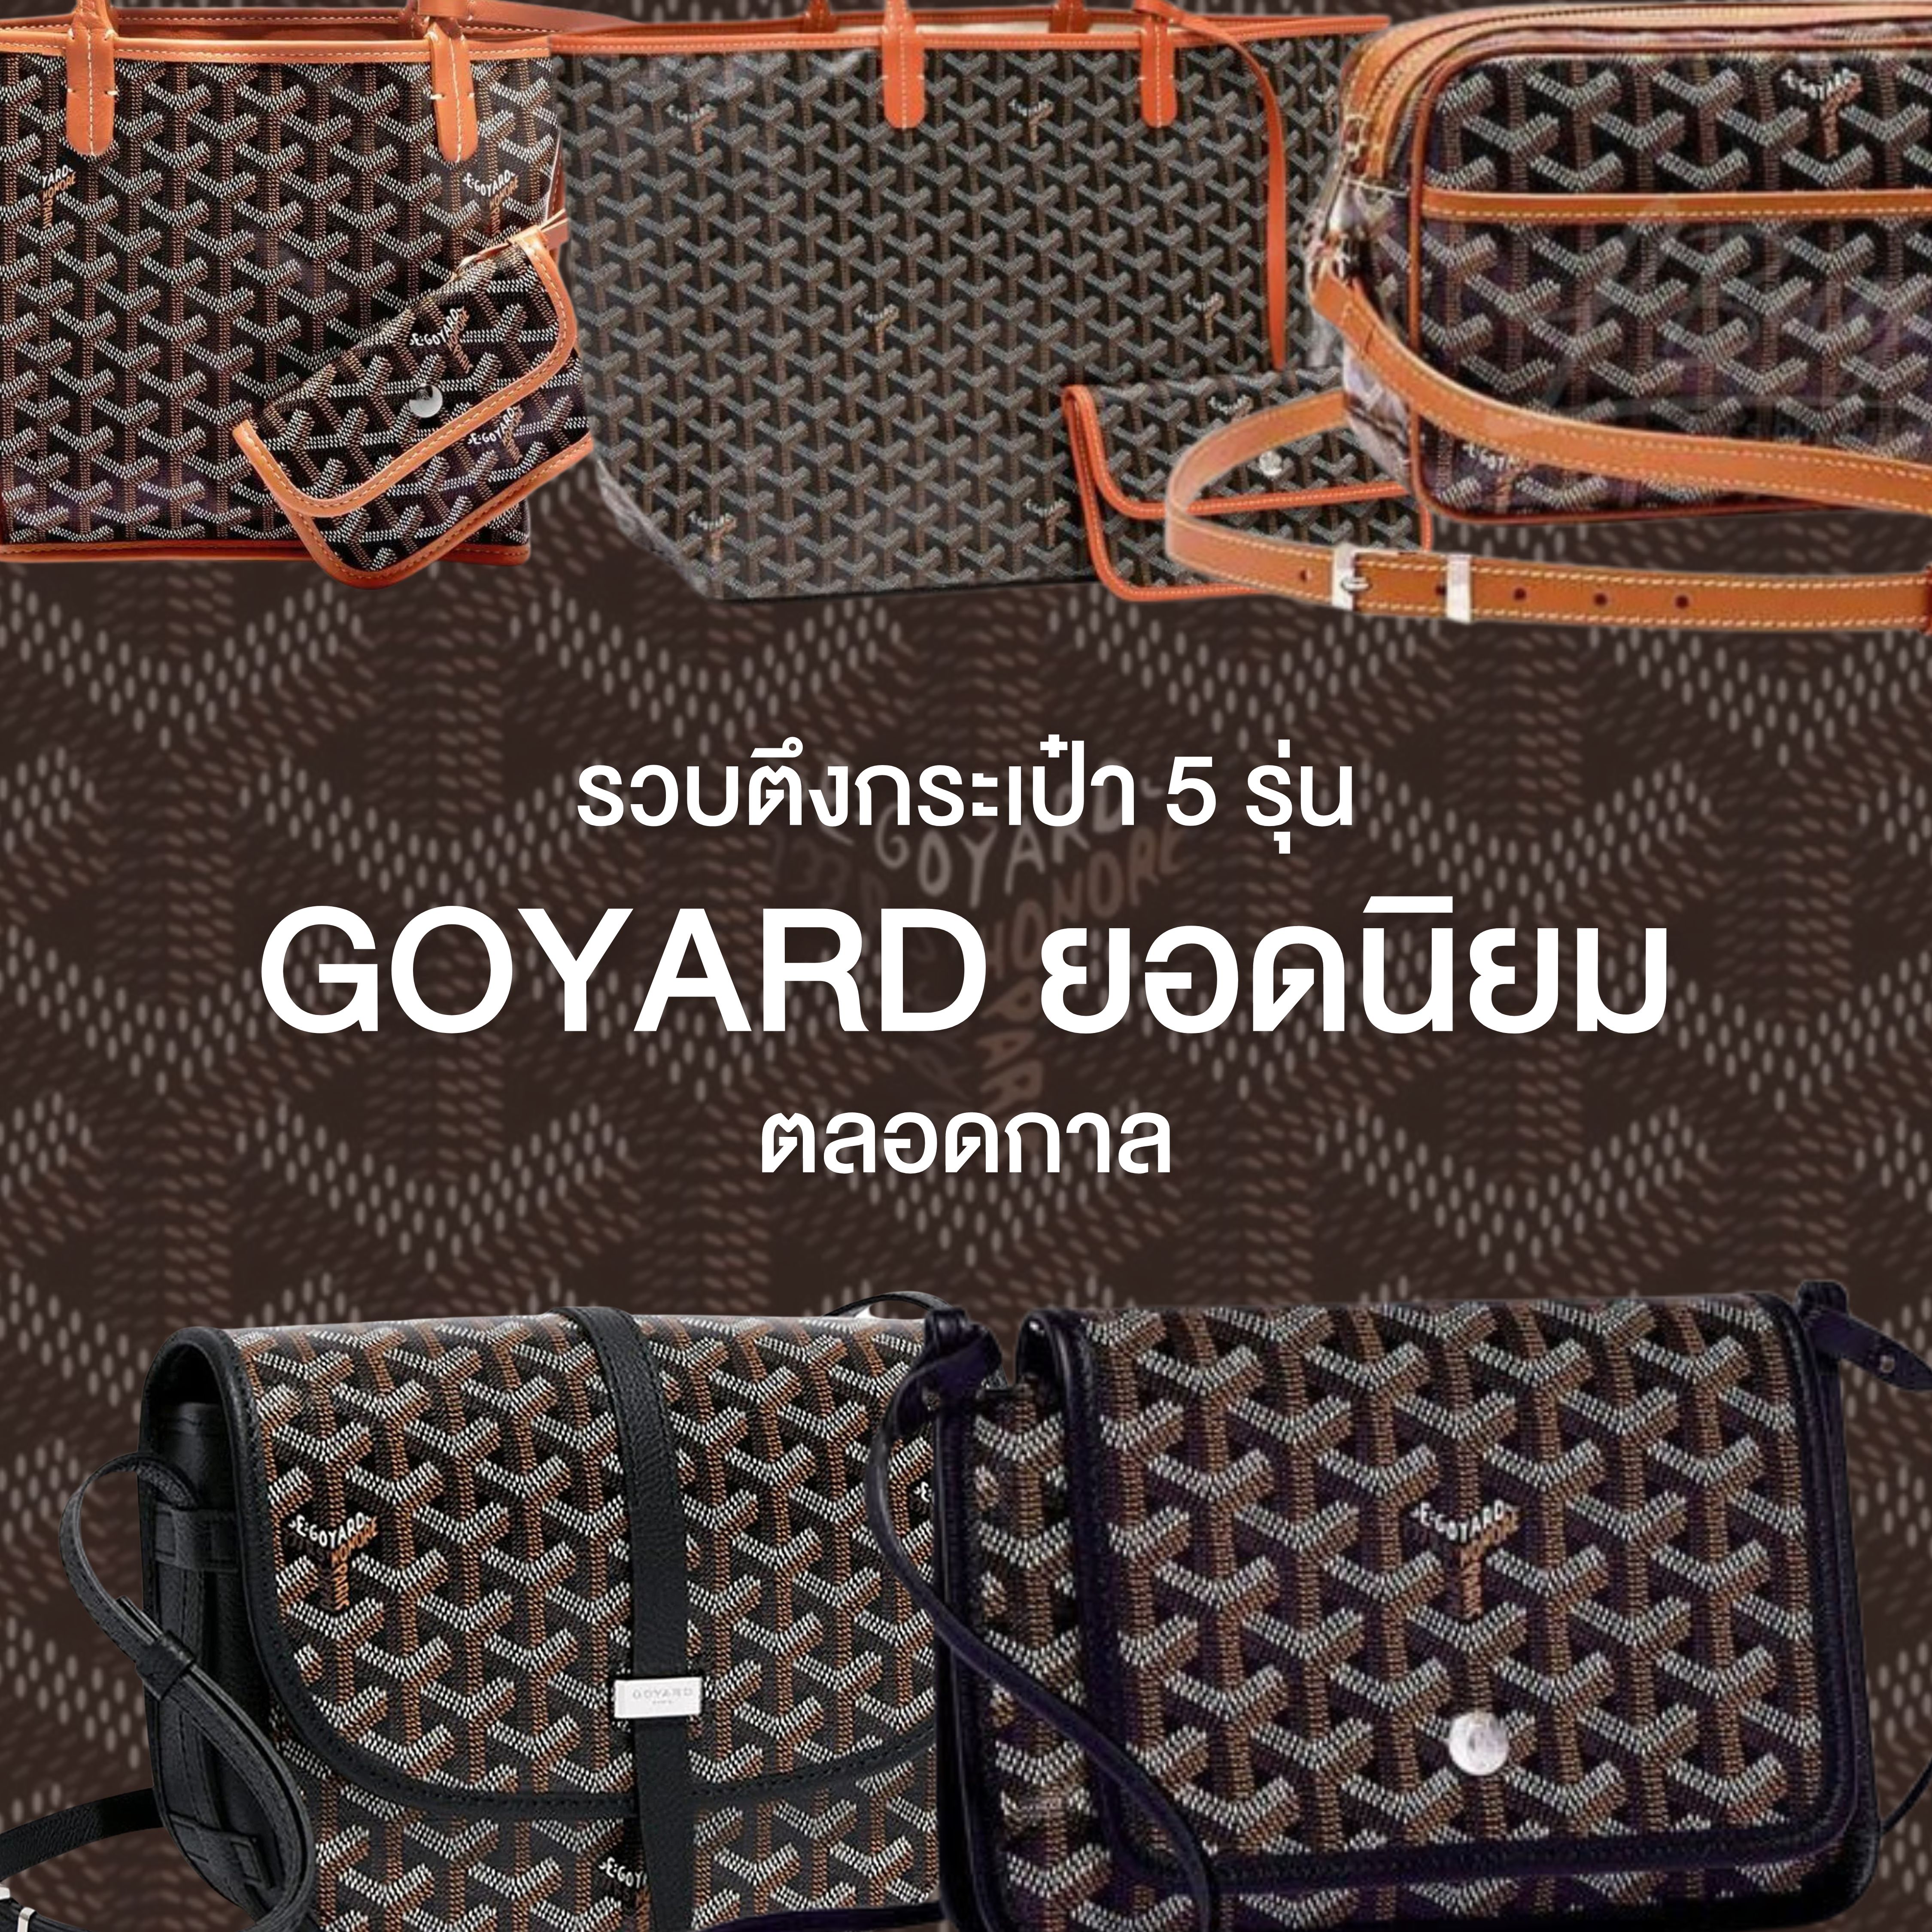 Top 5 กระเป๋า Goyard ยอดนิยม ซื้อก็คุ้มขายก็กำไร